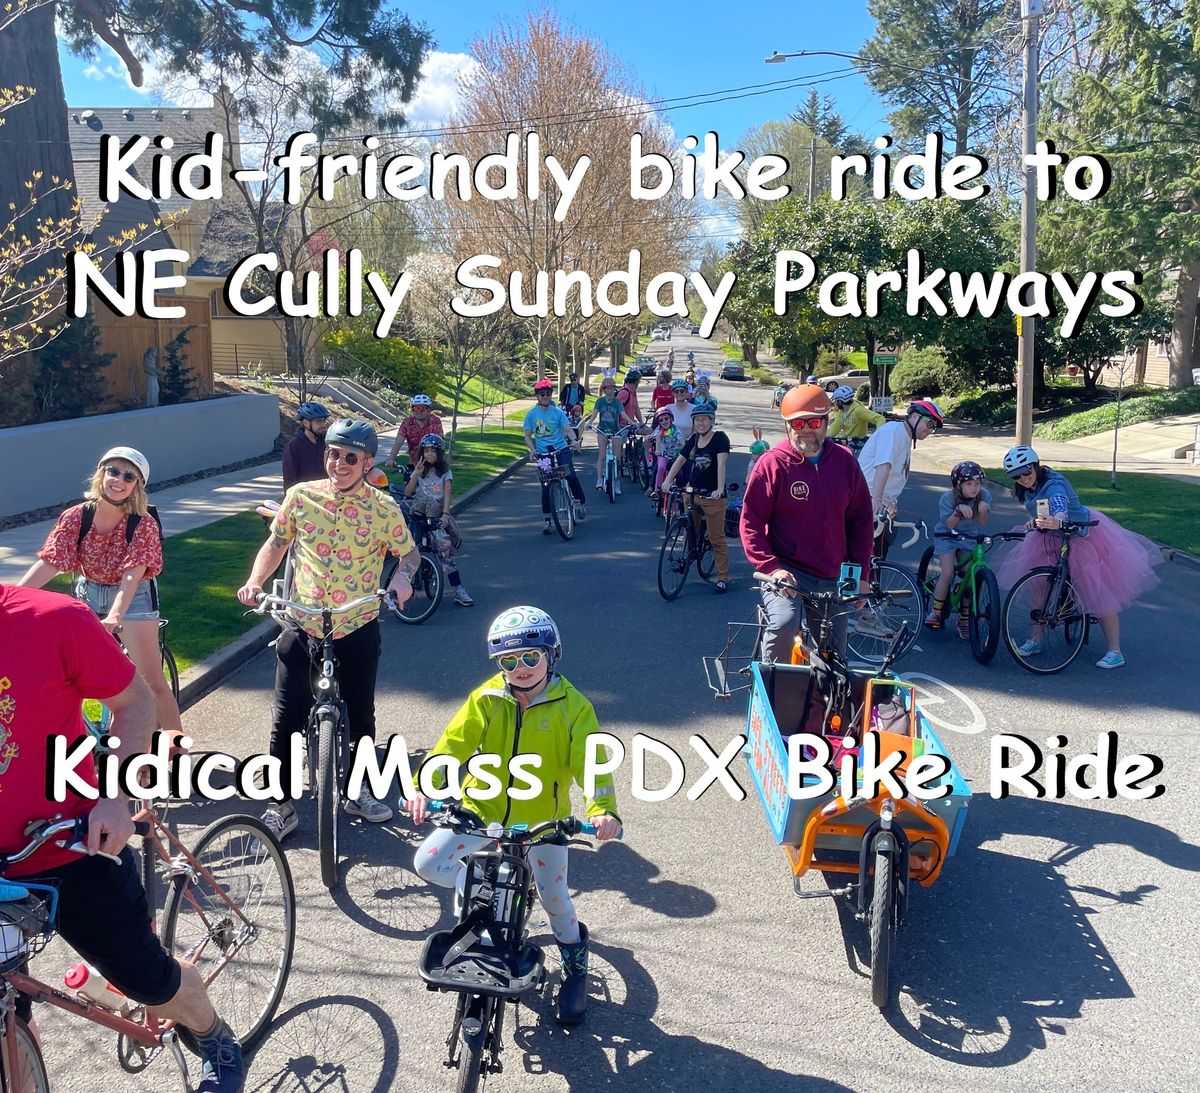 Bike Ride to Sunday Parkways - Kidical Mass PDX